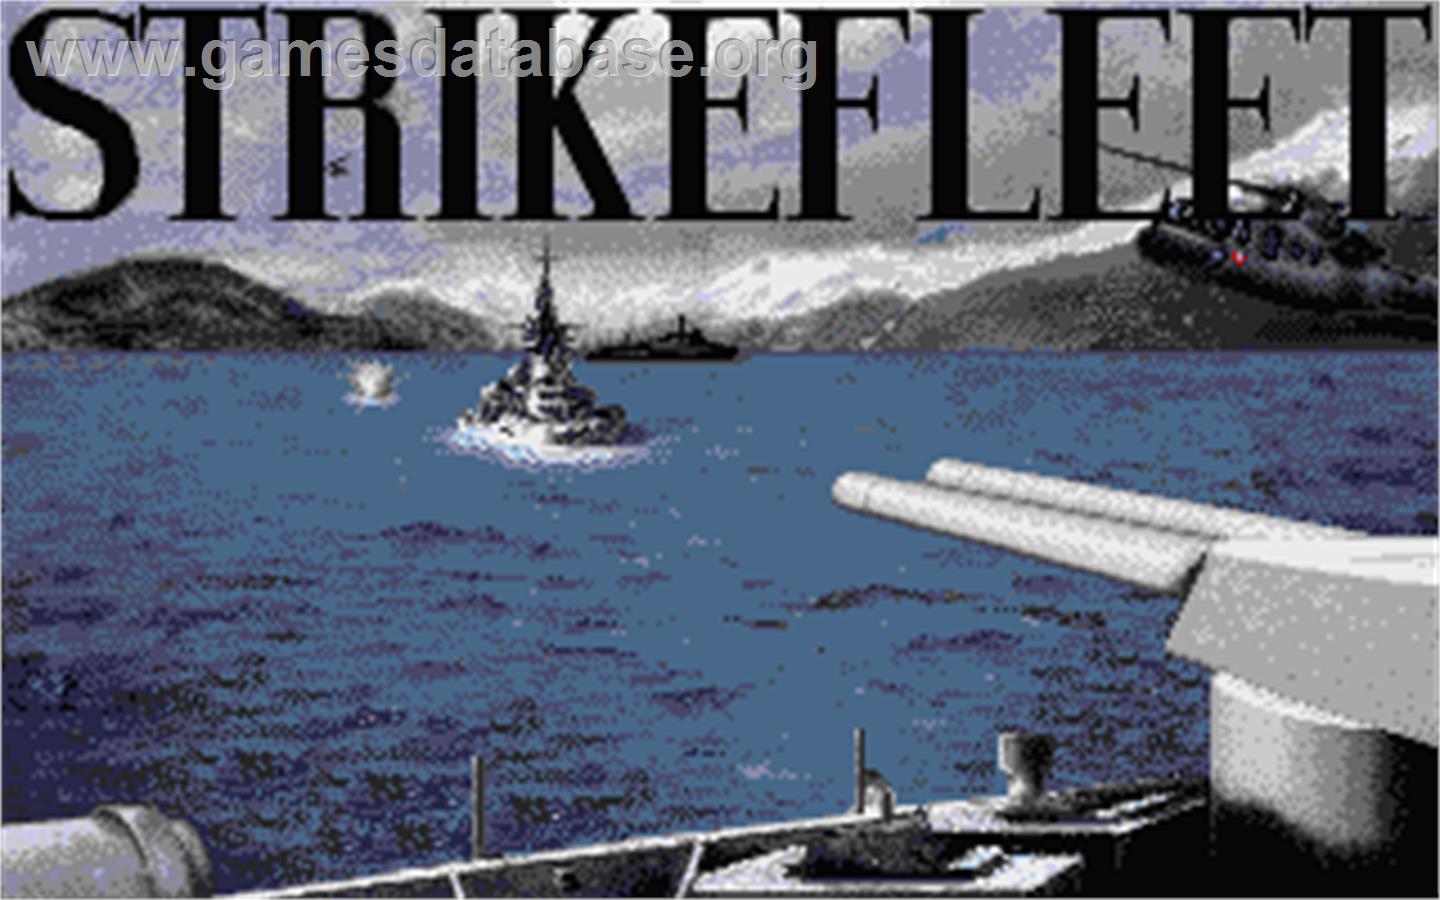 Strike Fleet - Atari ST - Artwork - Title Screen